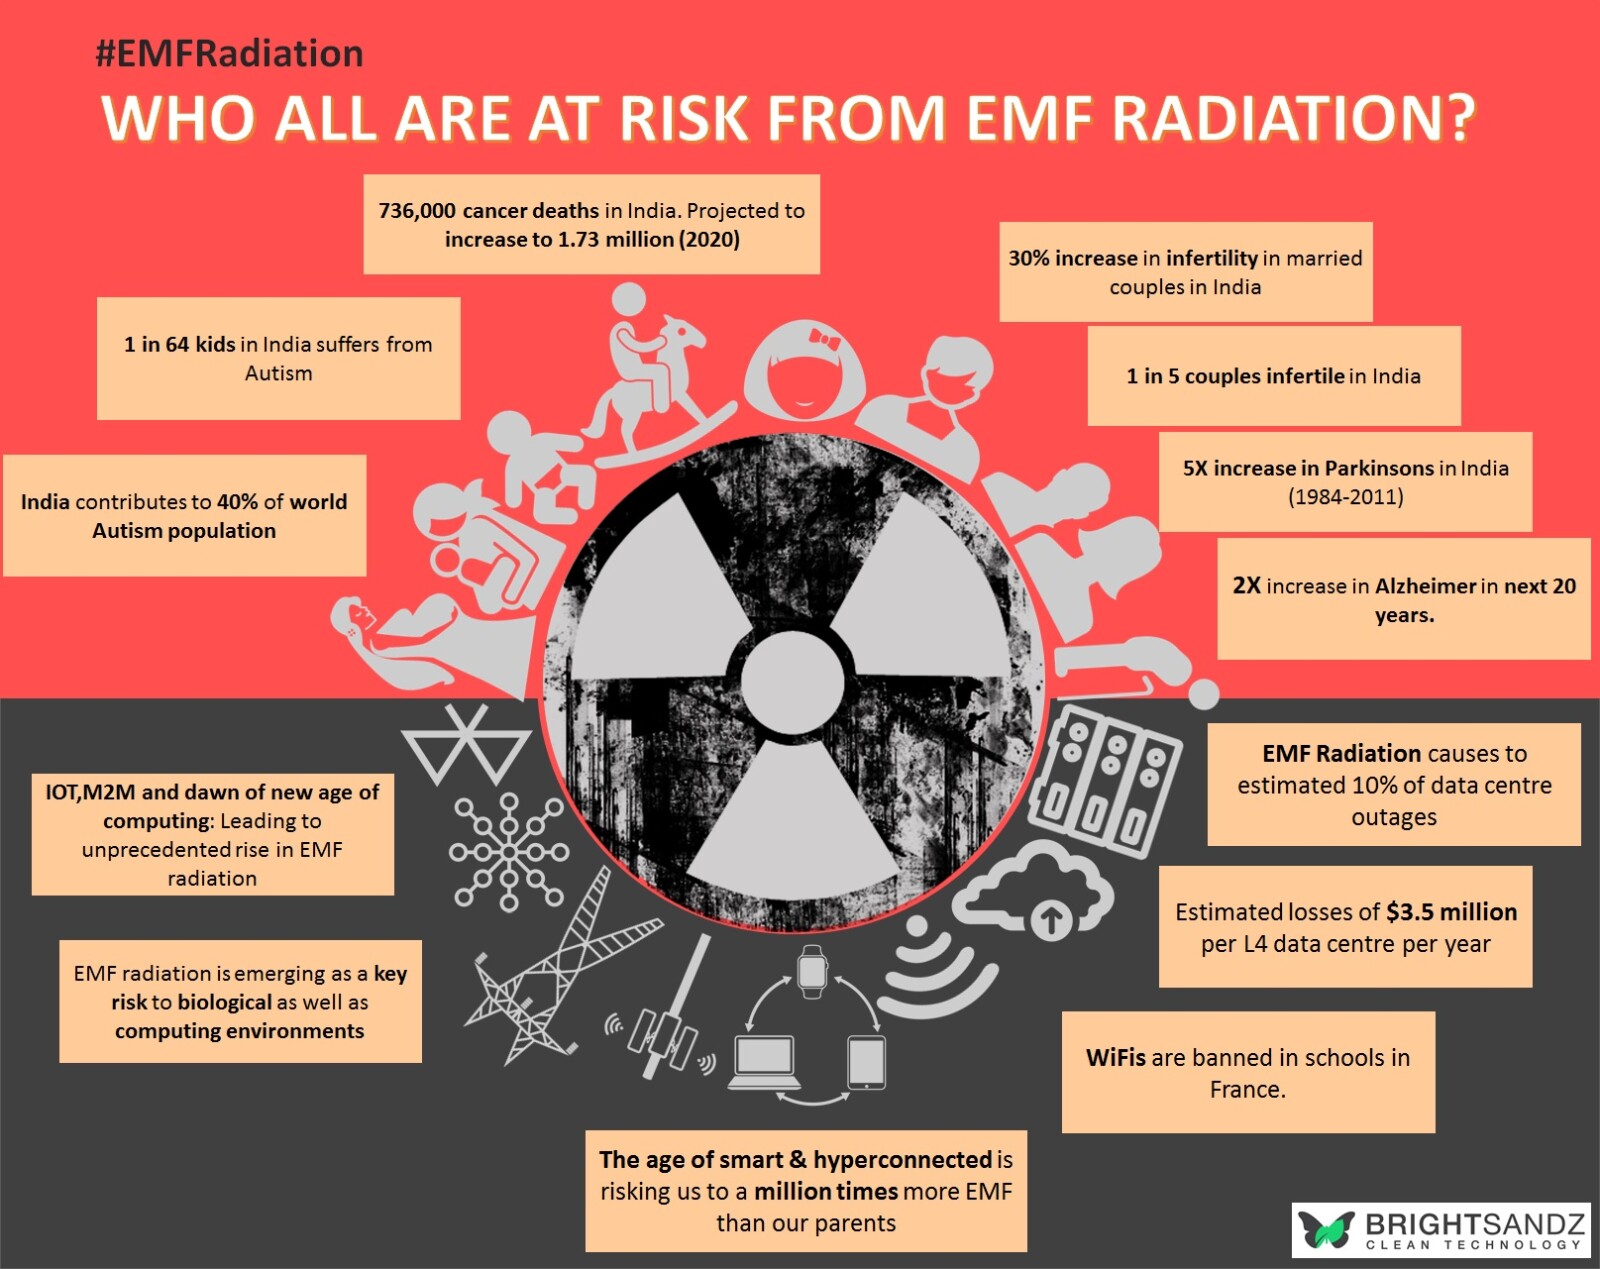 Dangers of EMF Exposure